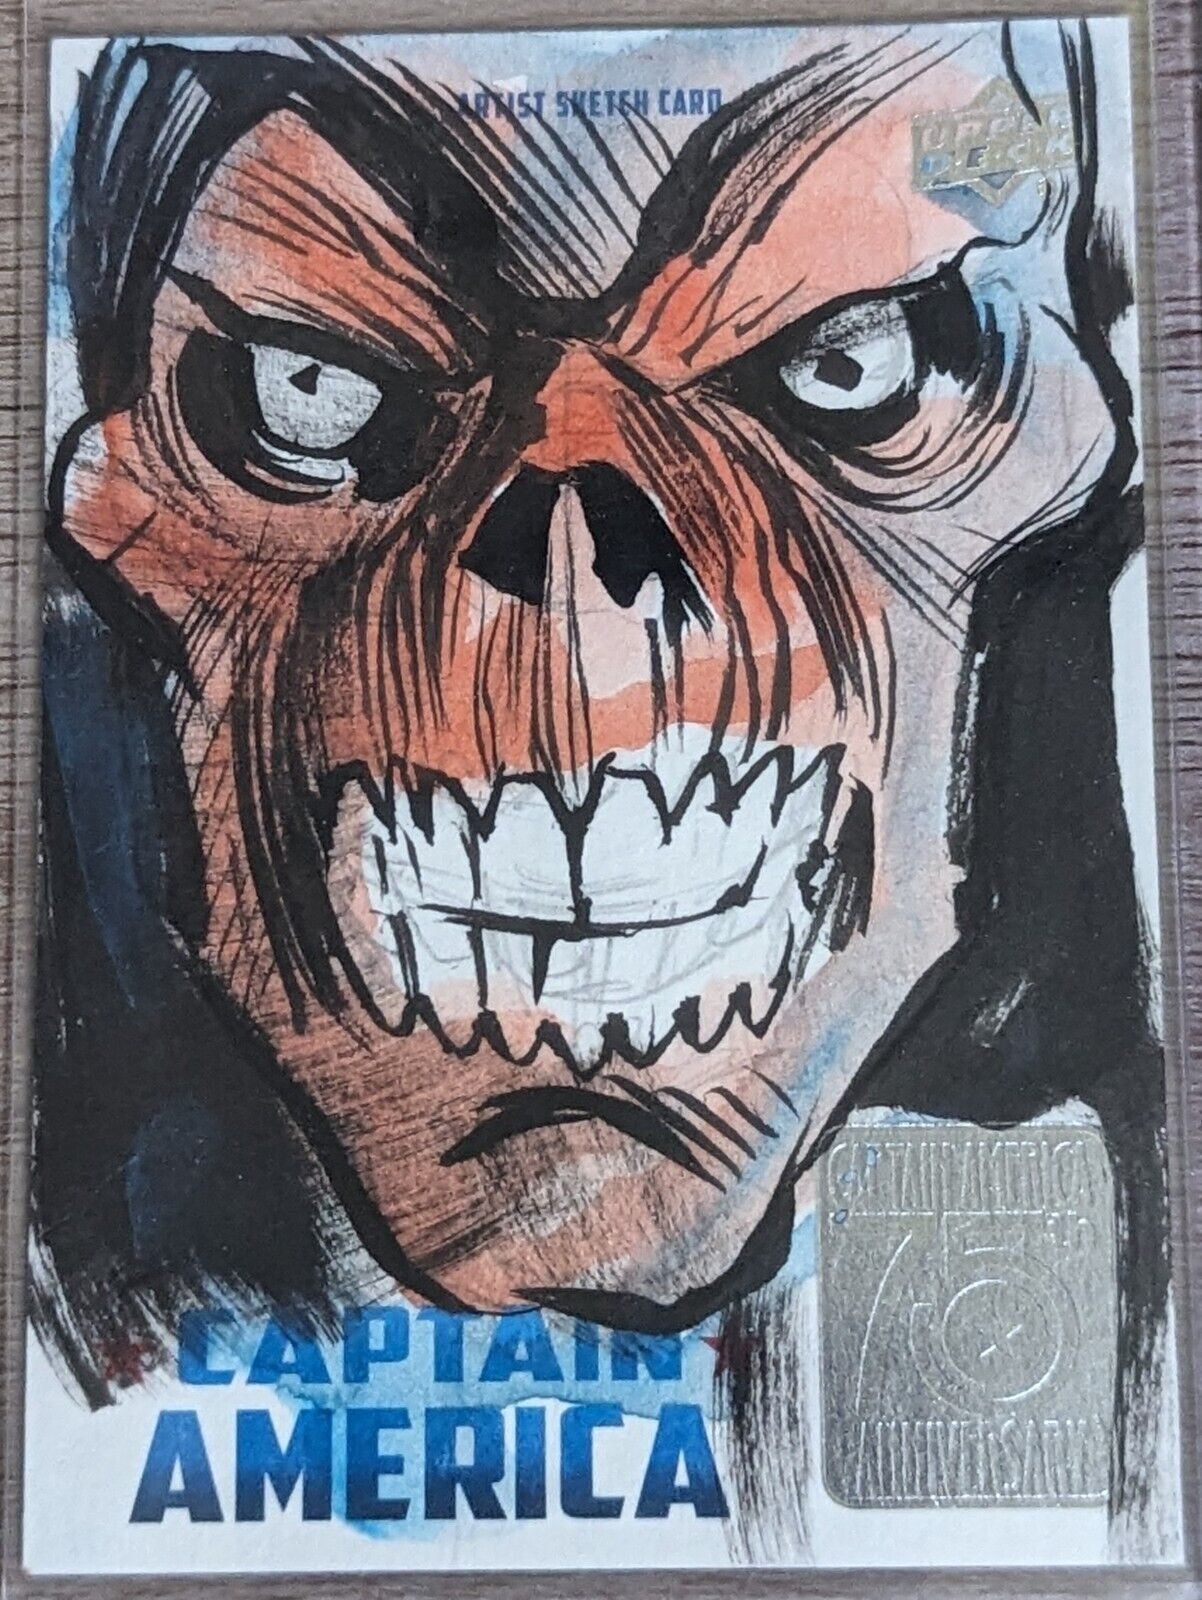 2016 Upper Deck Captain America 75th Anniversary Sketch Card Red Skull 1/1